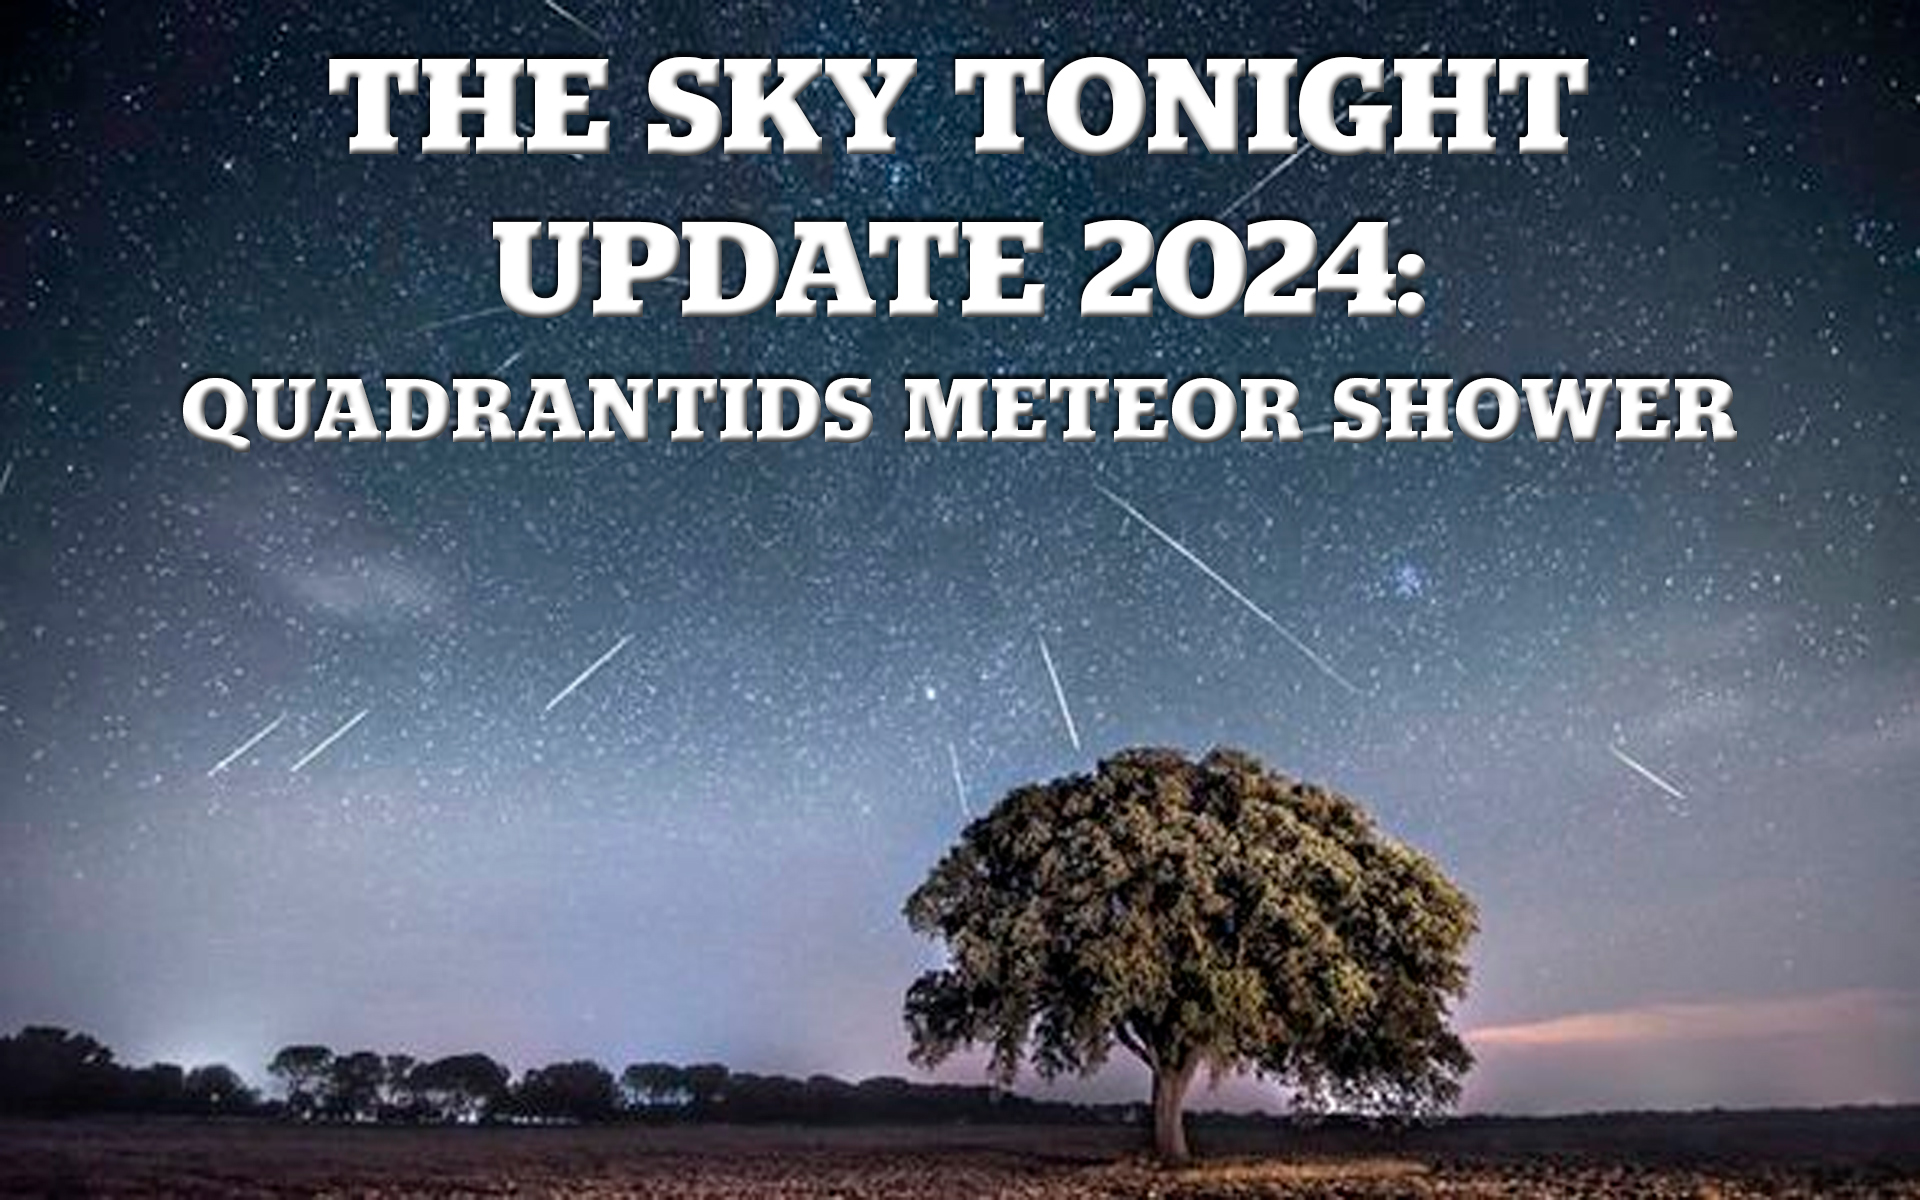 The Sky Tonight Update: Quadrantids Meteor Shower